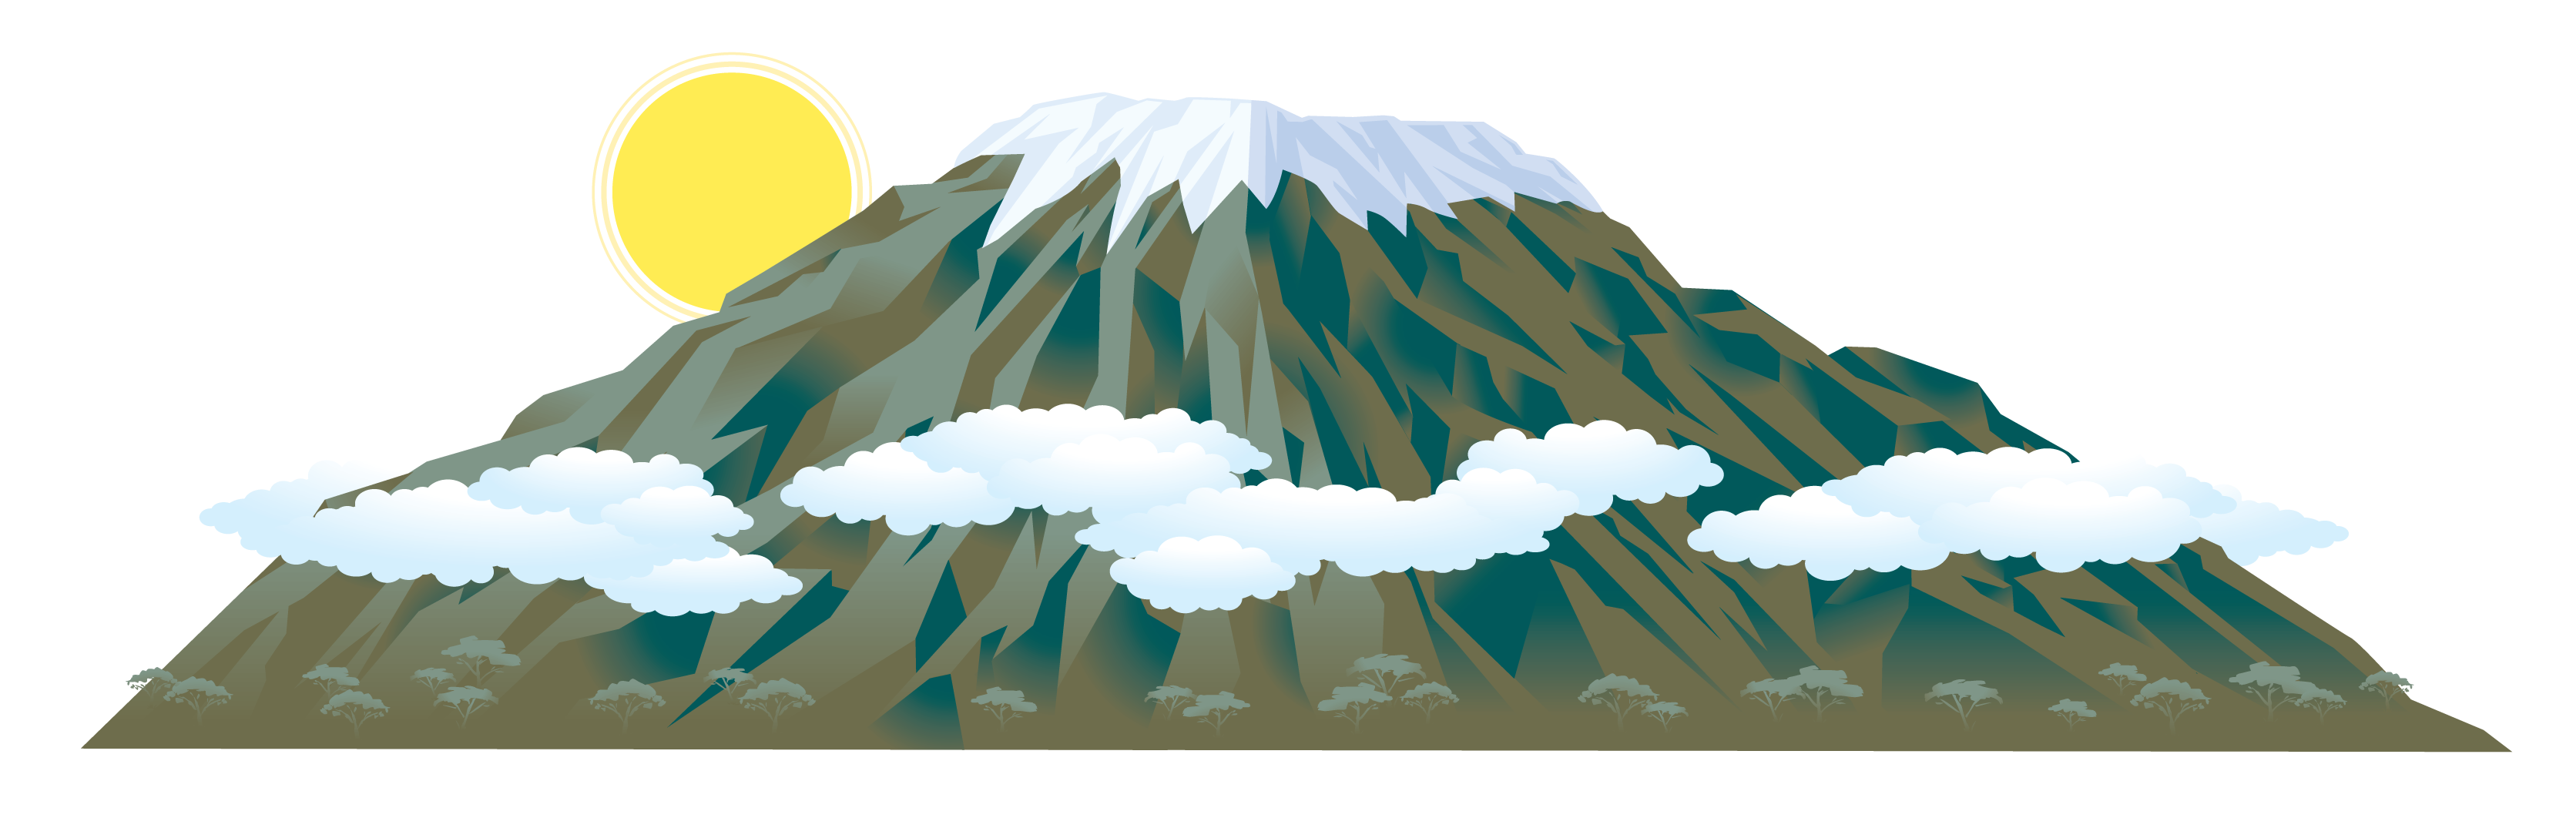 Mount Kilimanjaro Clipart.